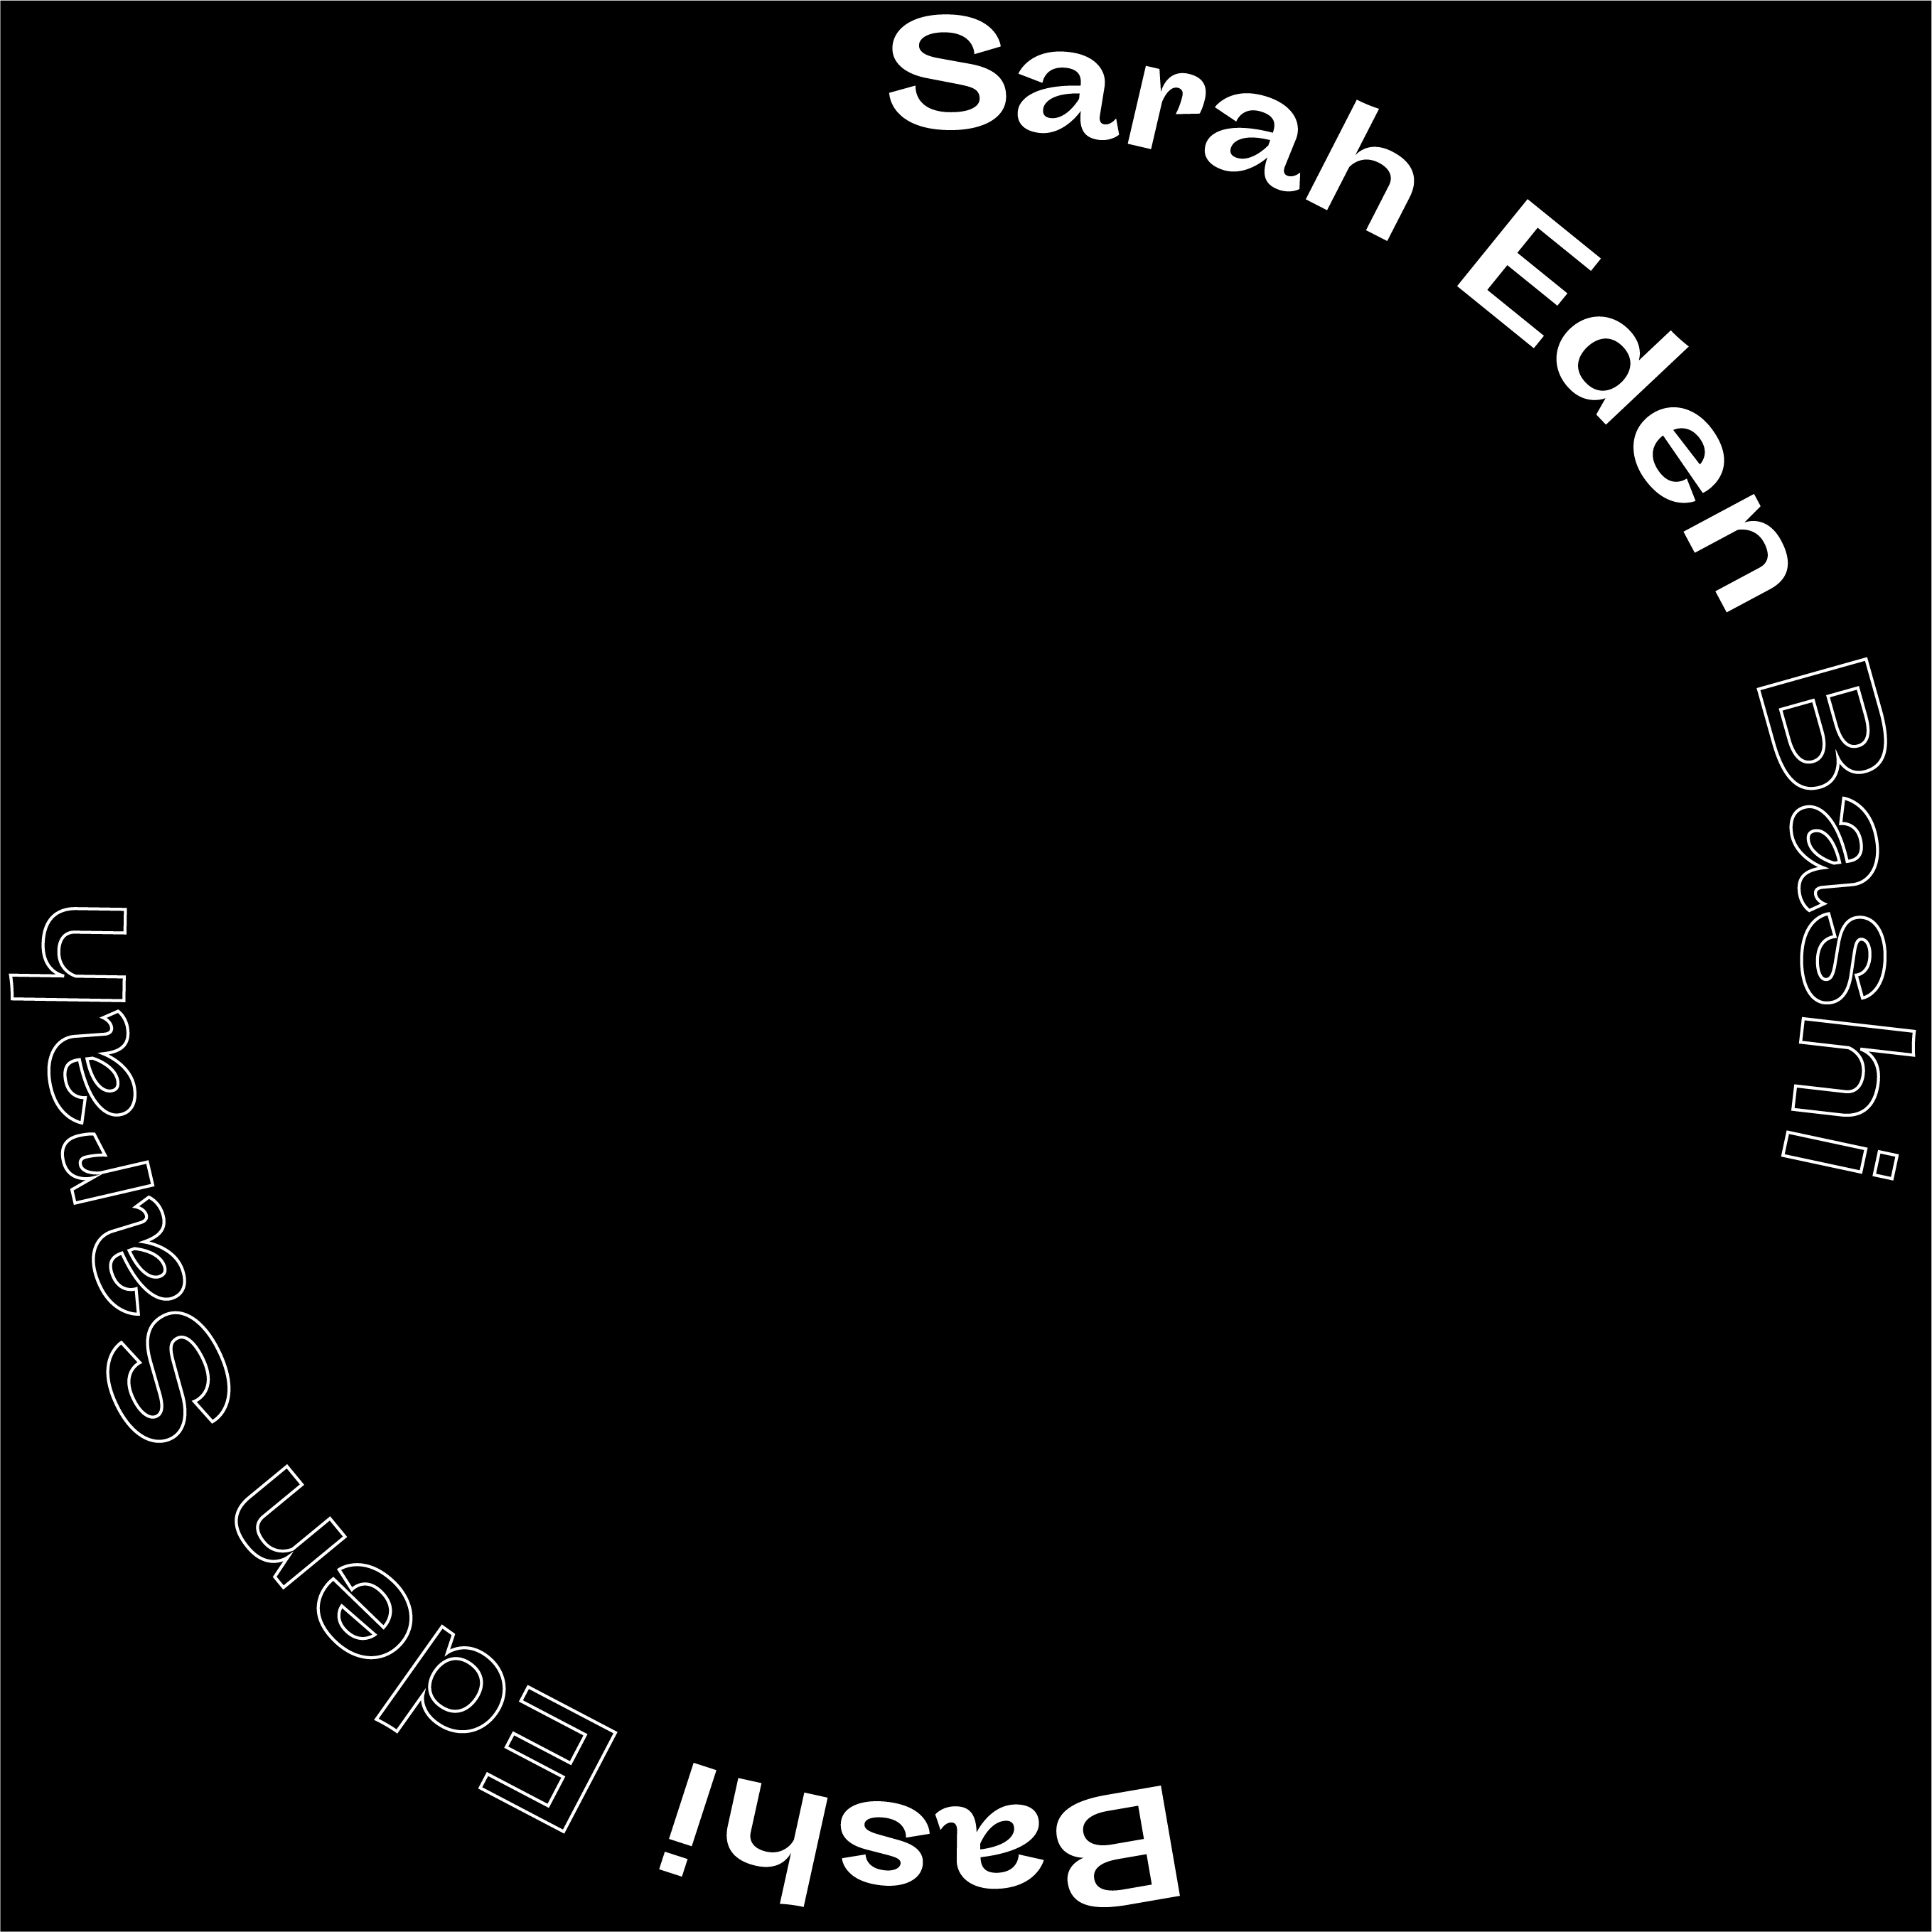 Sarah Eden Bashi